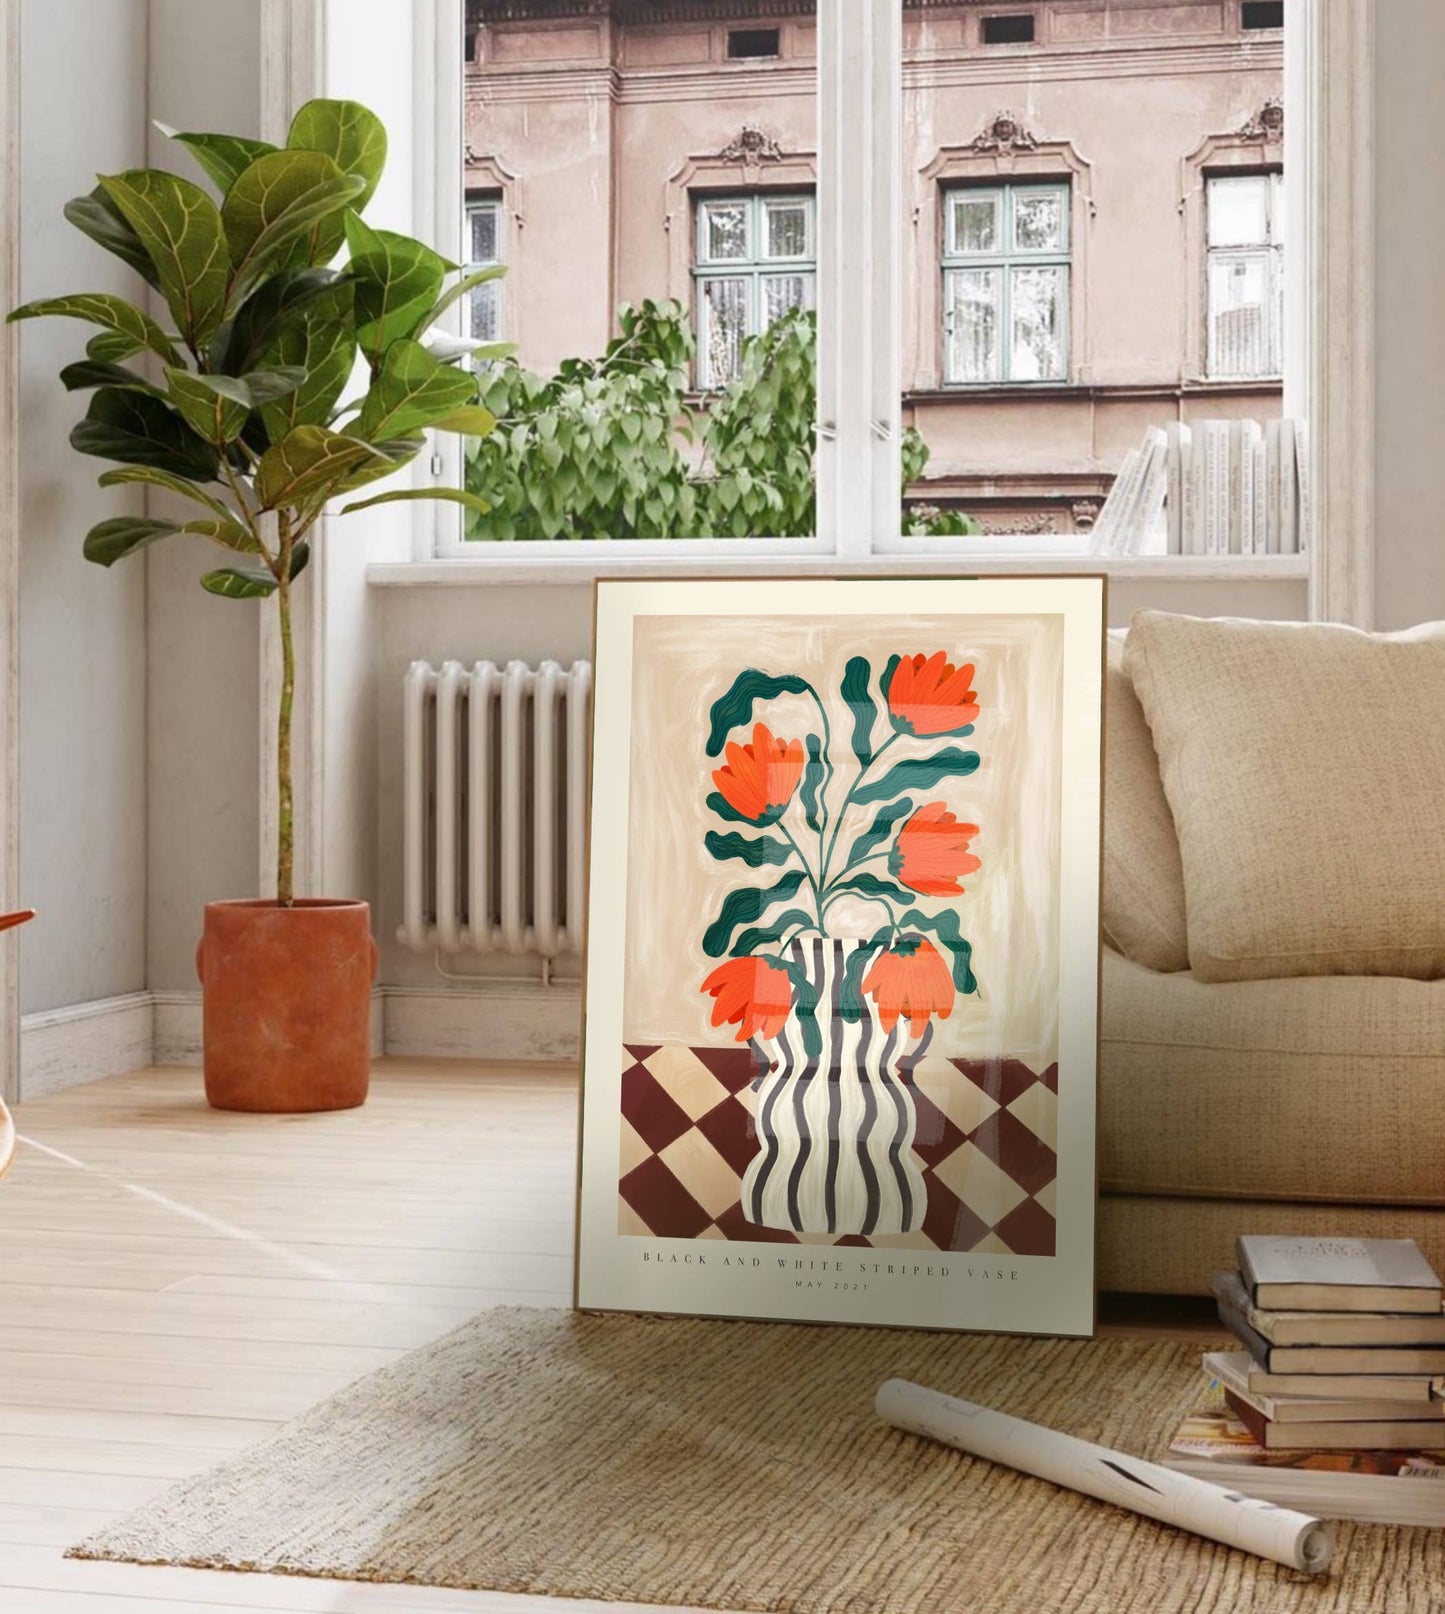 Vase Art Print, Colourful Art Print, Hand Drawn Art, Quirky: A3